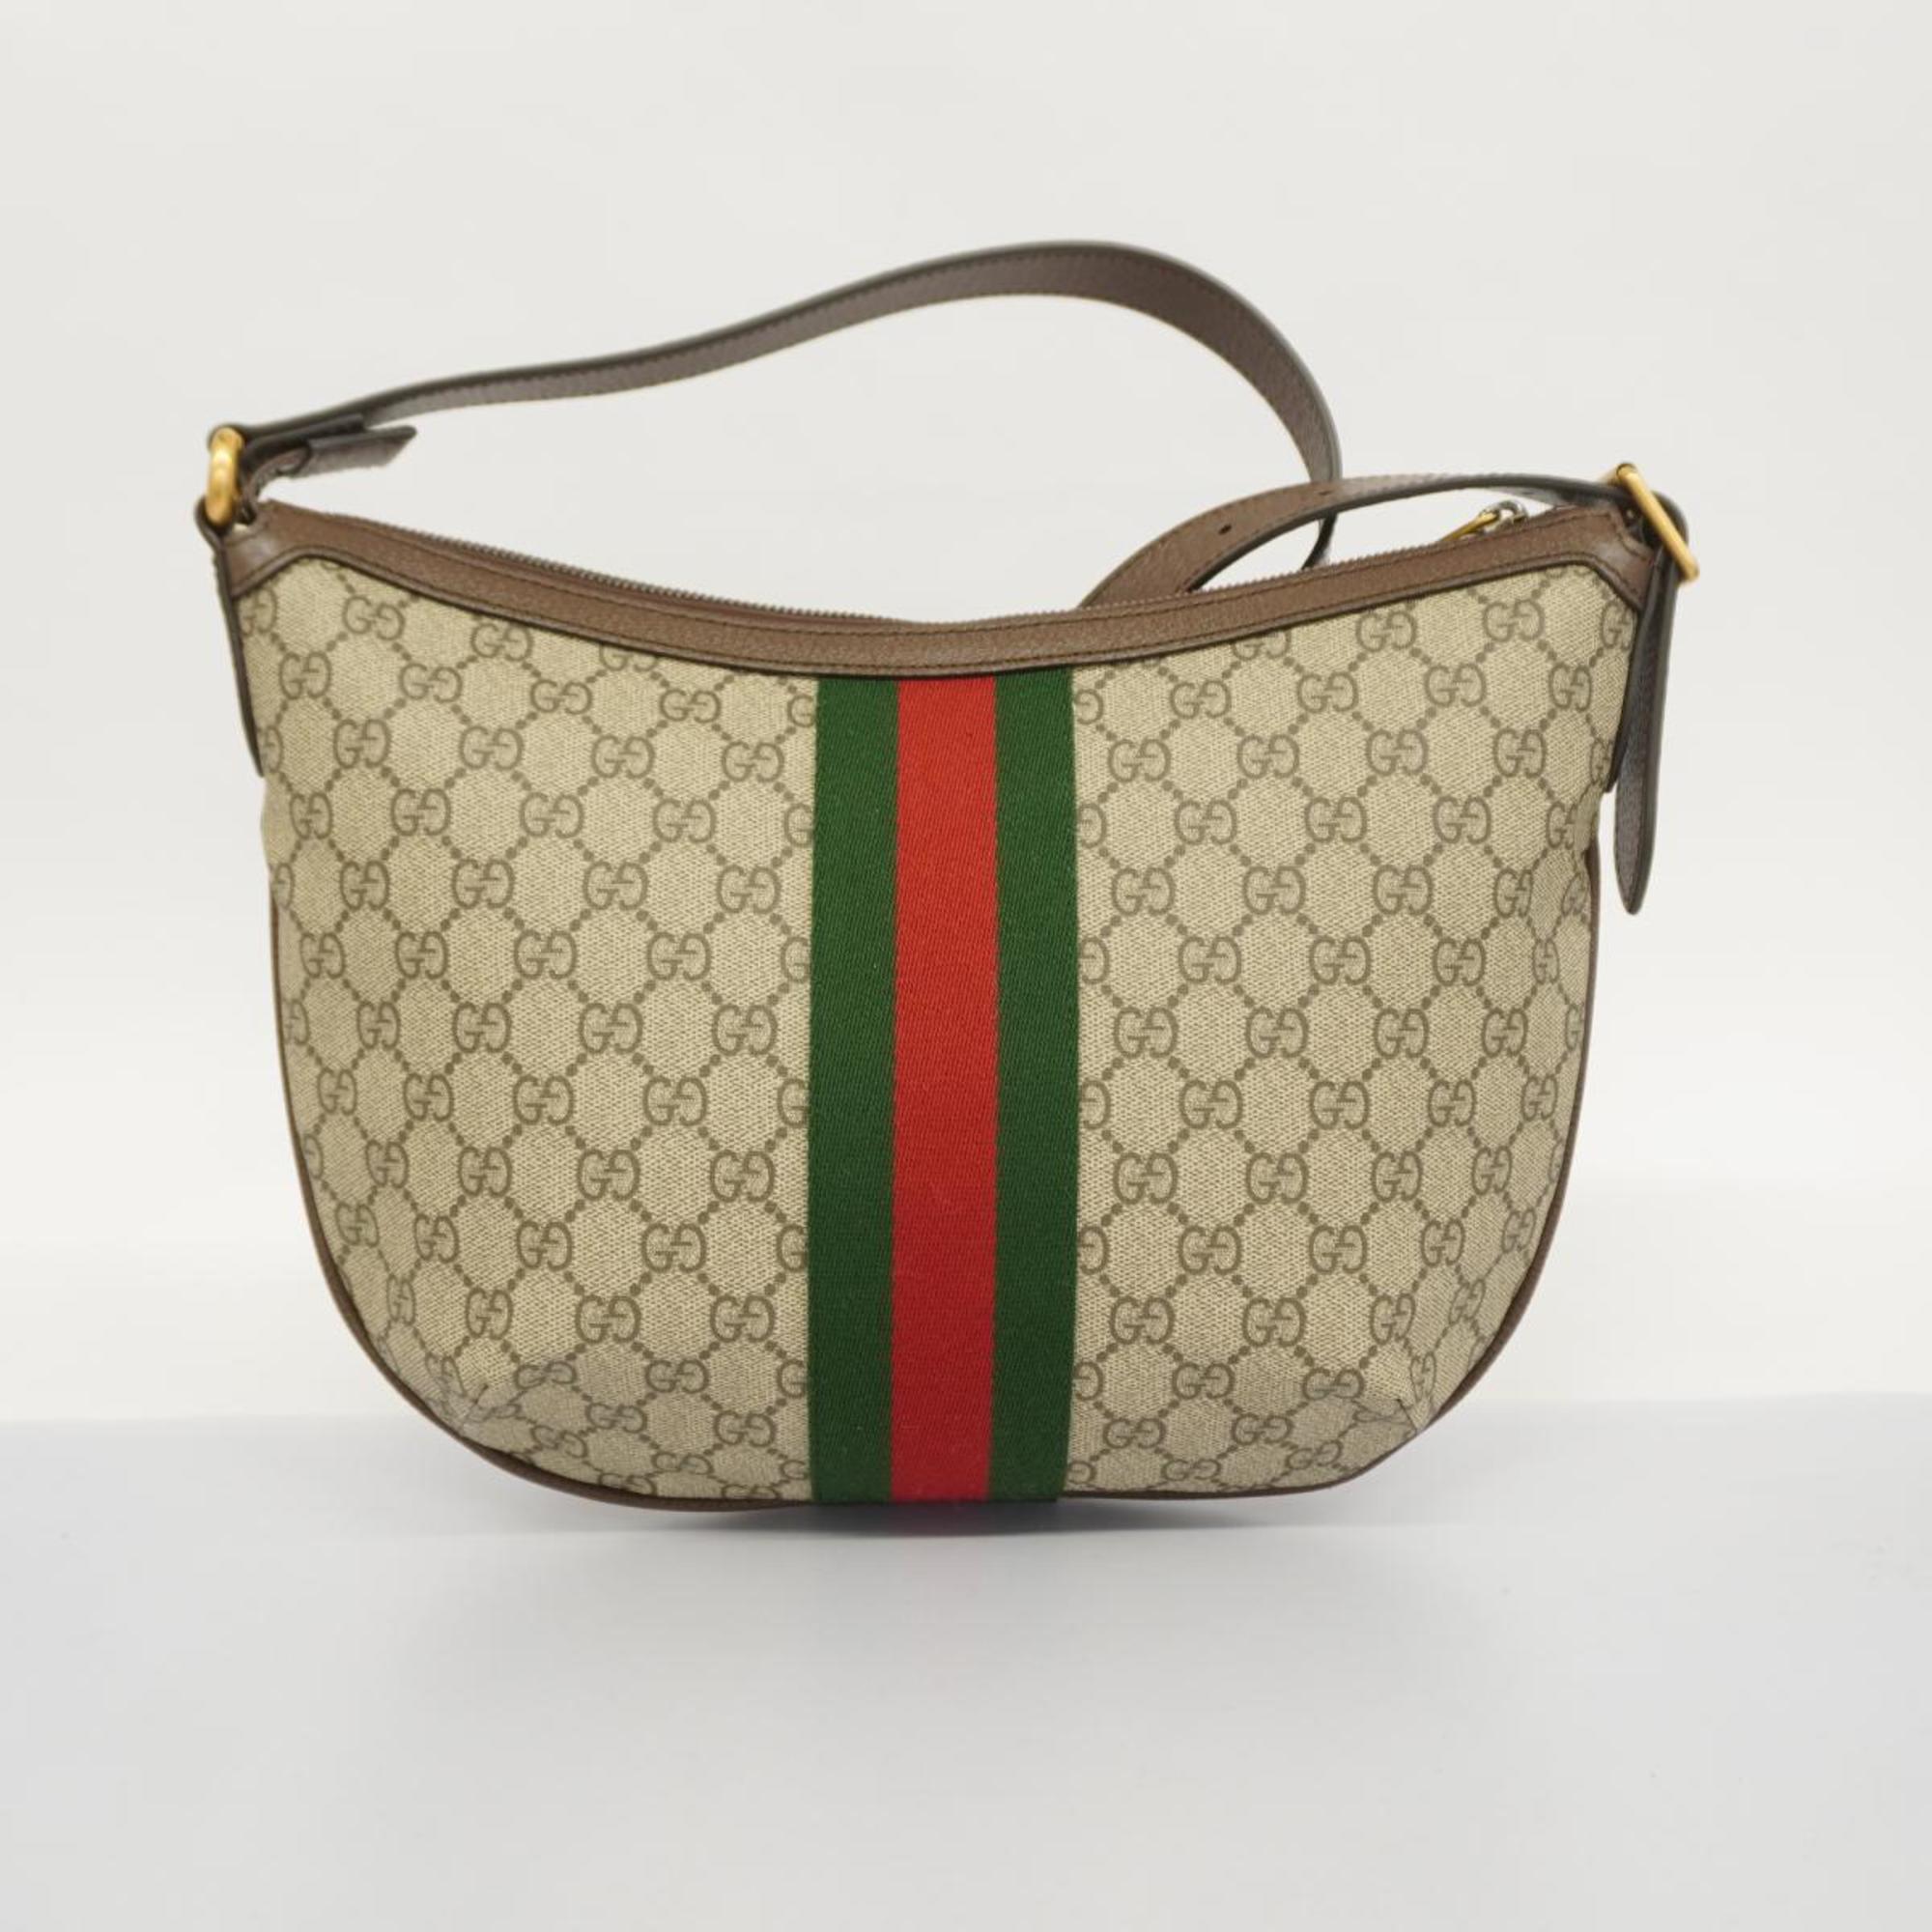 Gucci Shoulder Bag Ophidia 598125 Brown Women's